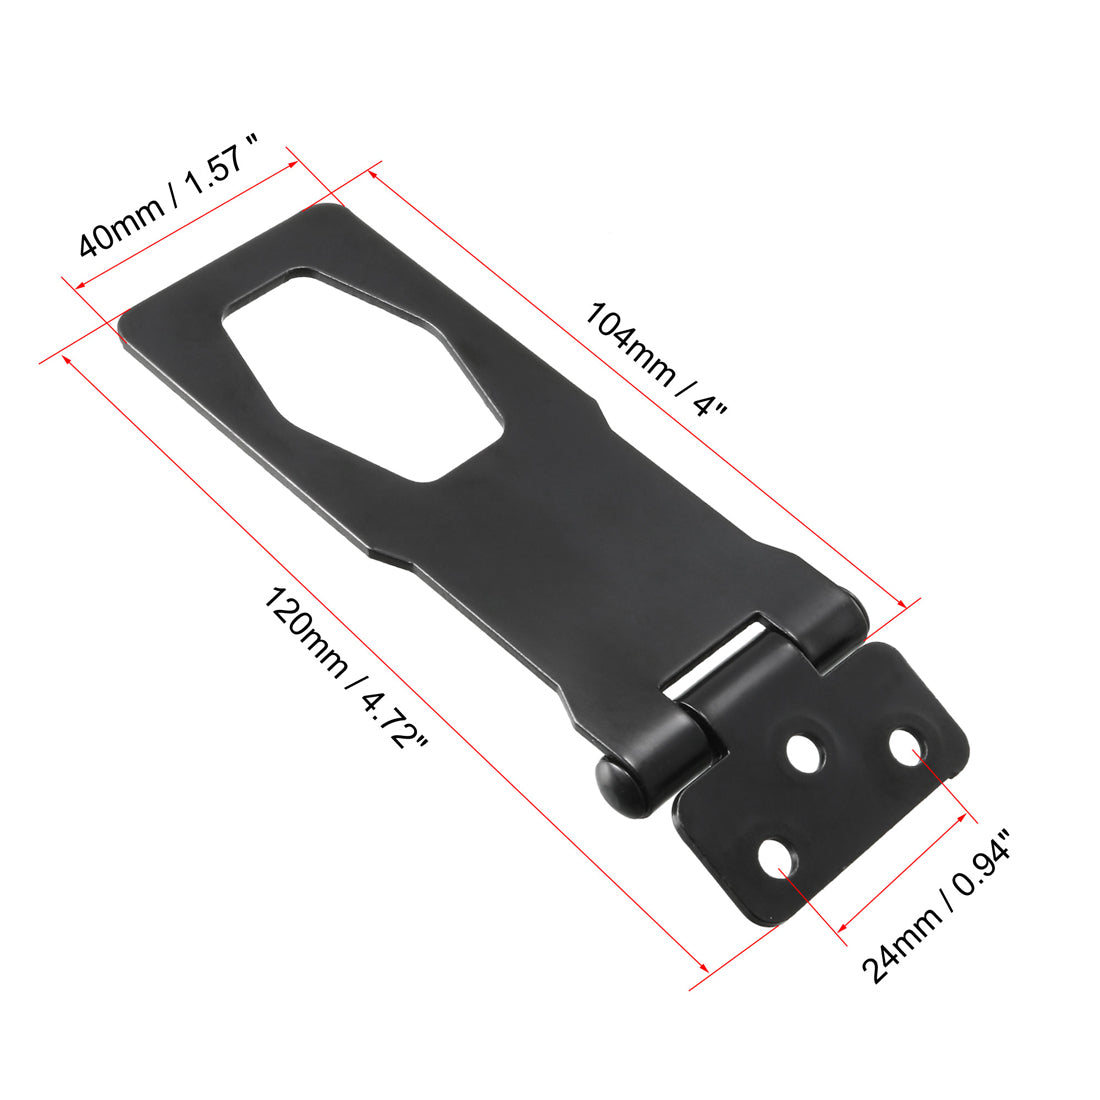 uxcell Uxcell 4-inch Keyed Hasp Locks w Screws for Door Keyed Alike Black